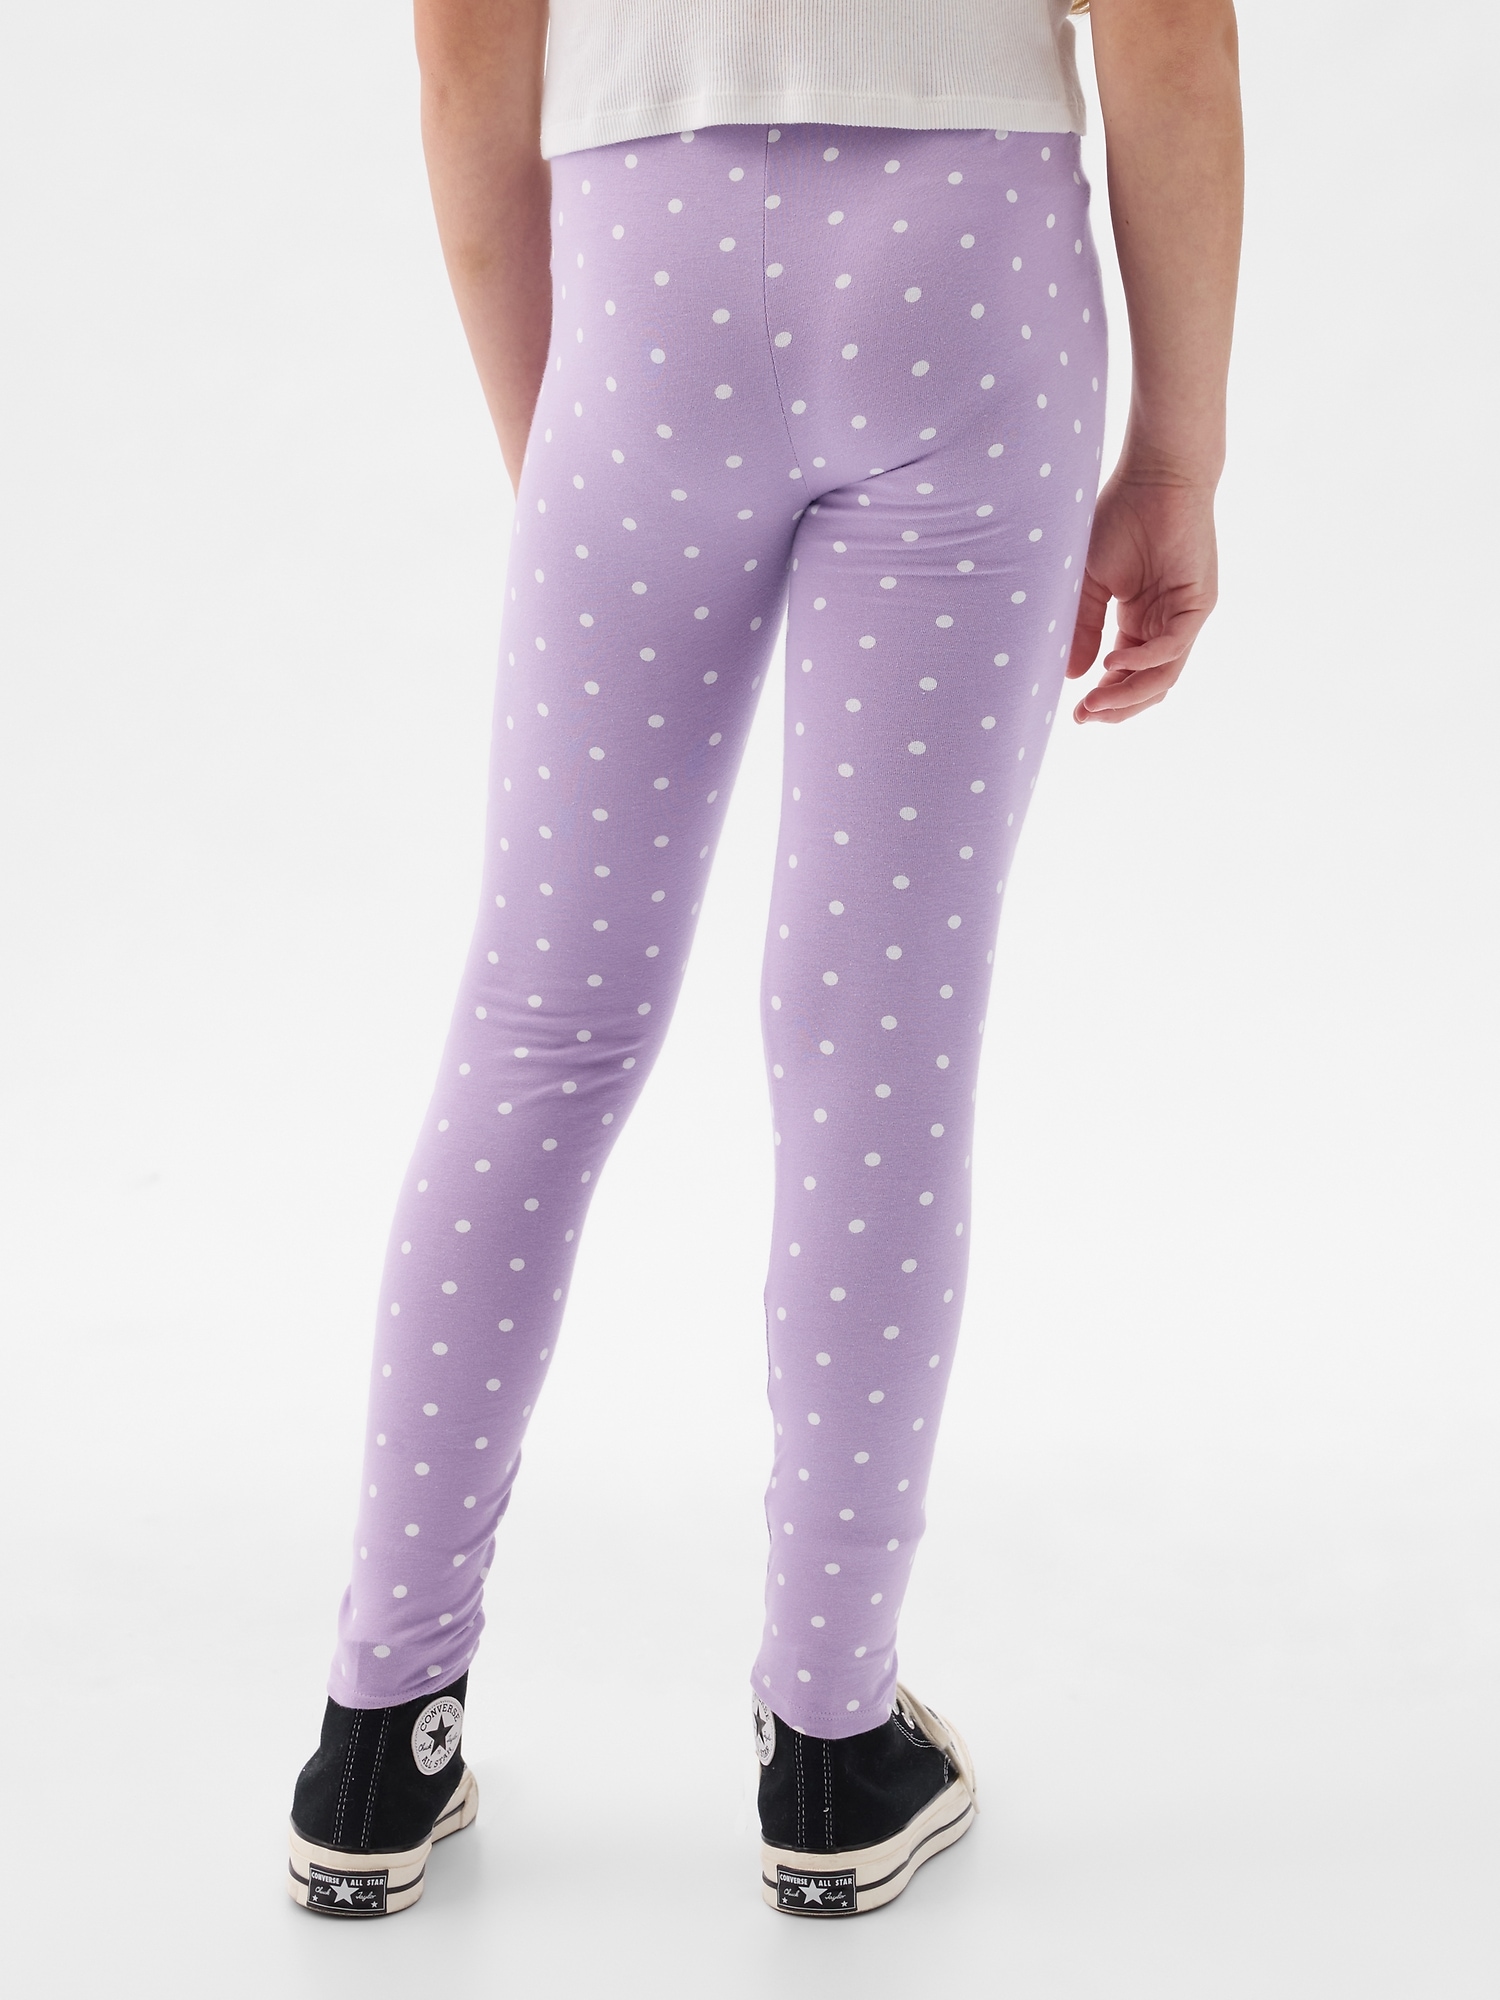 Gap Kids Solid Lavender Purple Leggings Size 14 - 16 - 33% off